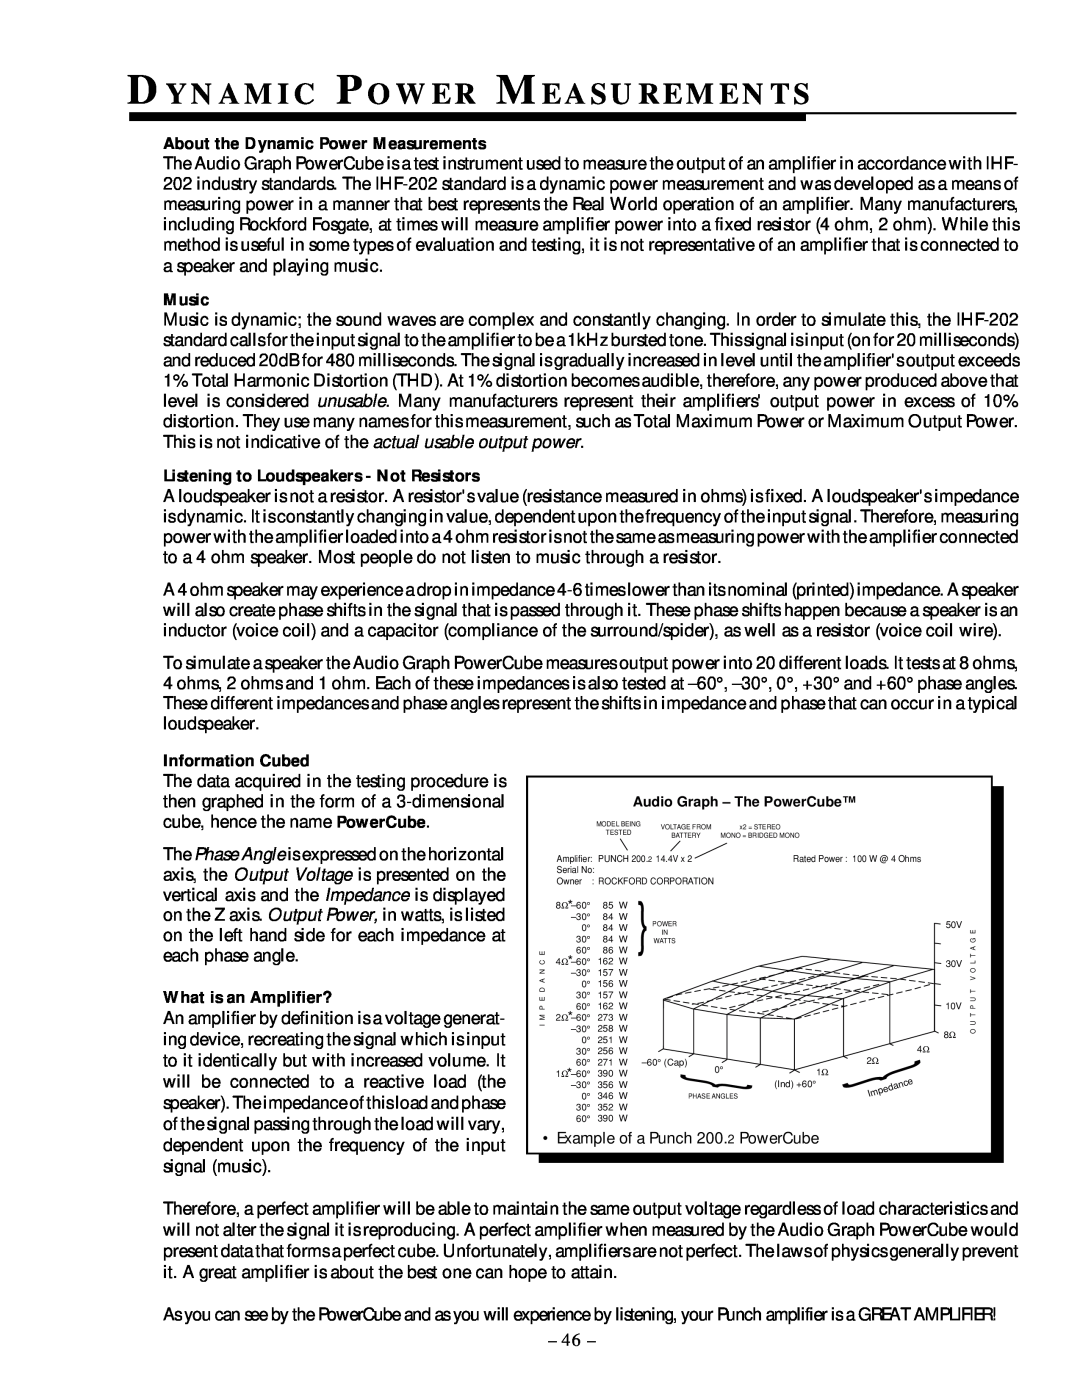 Rockford Fosgate 250.1 manual Dy N A M I C Po W E R Me A S U R E M E N T S, About the Dynamic Power Measurements, Music 